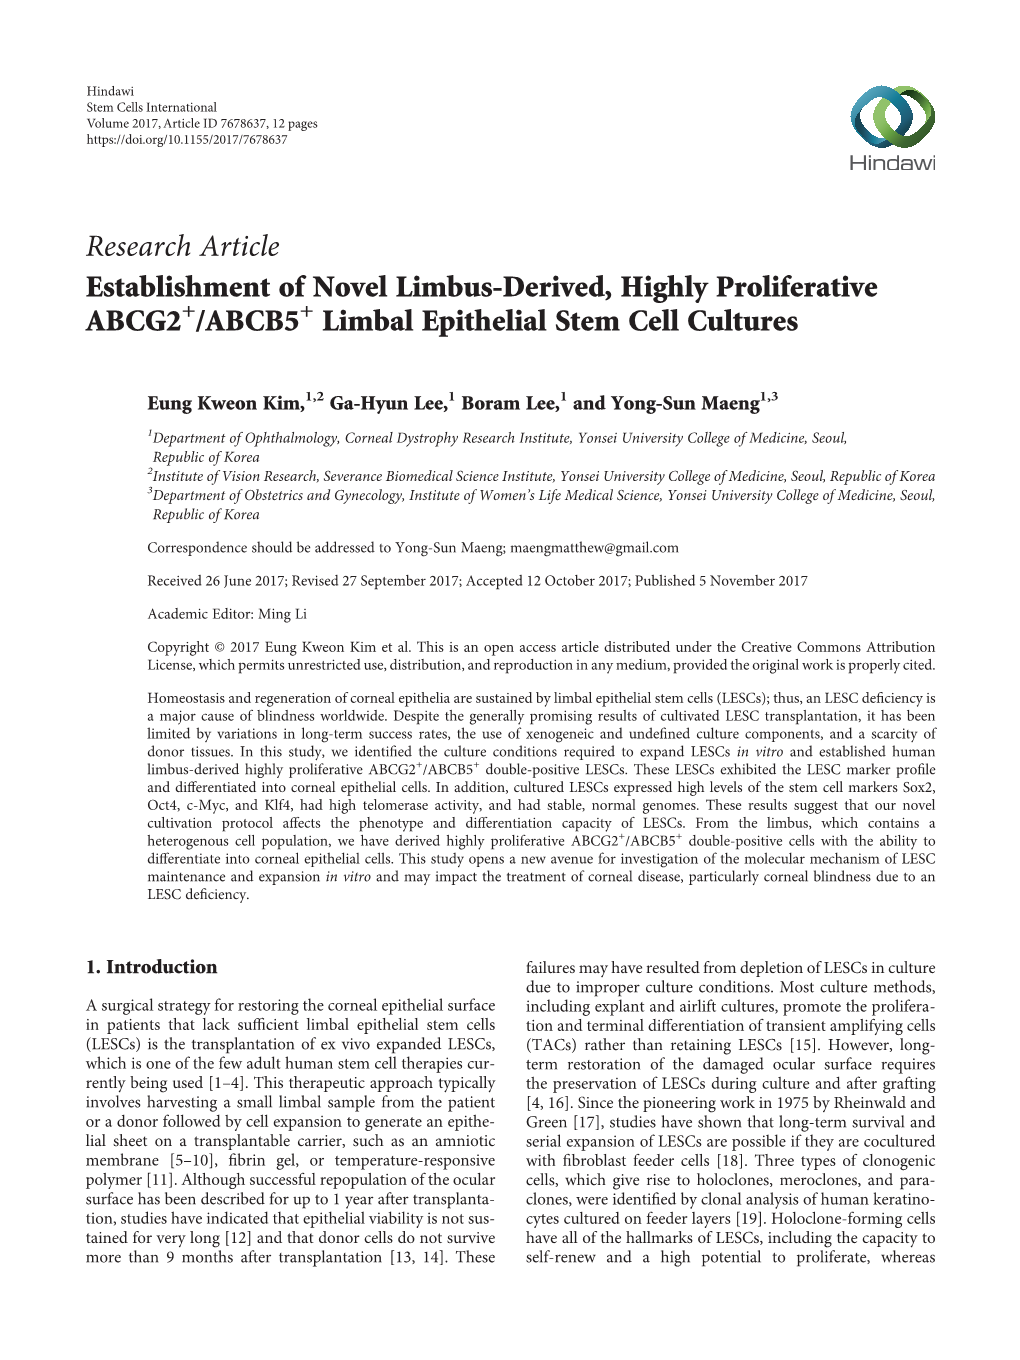 Establishment of Novel Limbus-Derived, Highly Proliferative ABCG2+/ABCB5+ Limbal Epithelial Stem Cell Cultures